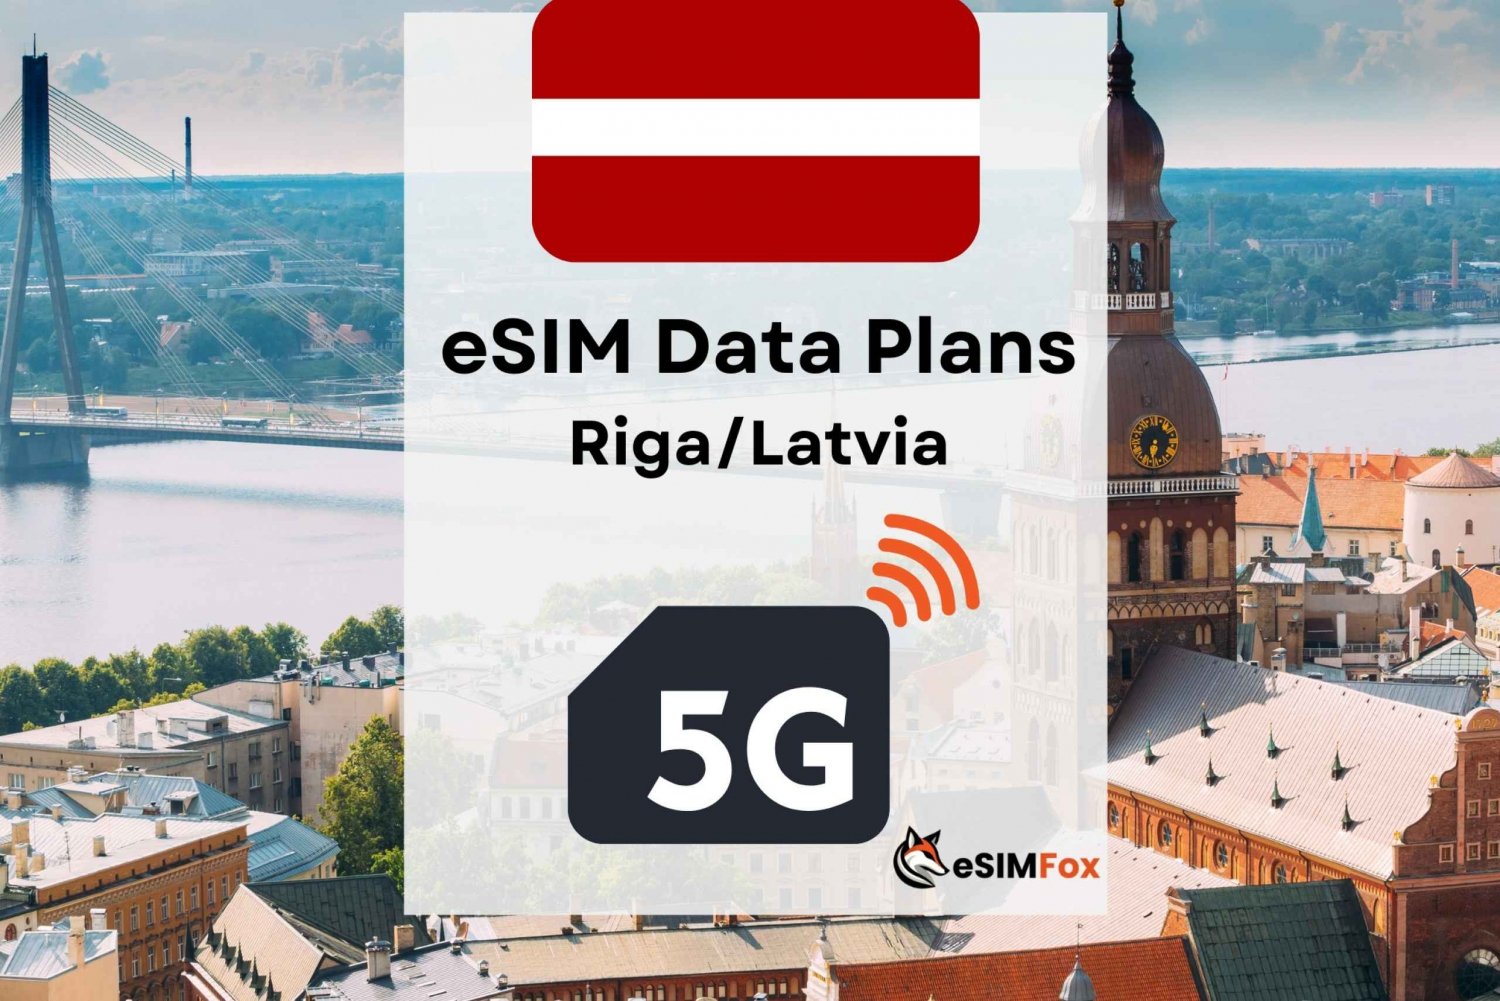 Riga: eSIM Internet Data Plan for Latvia high-speed